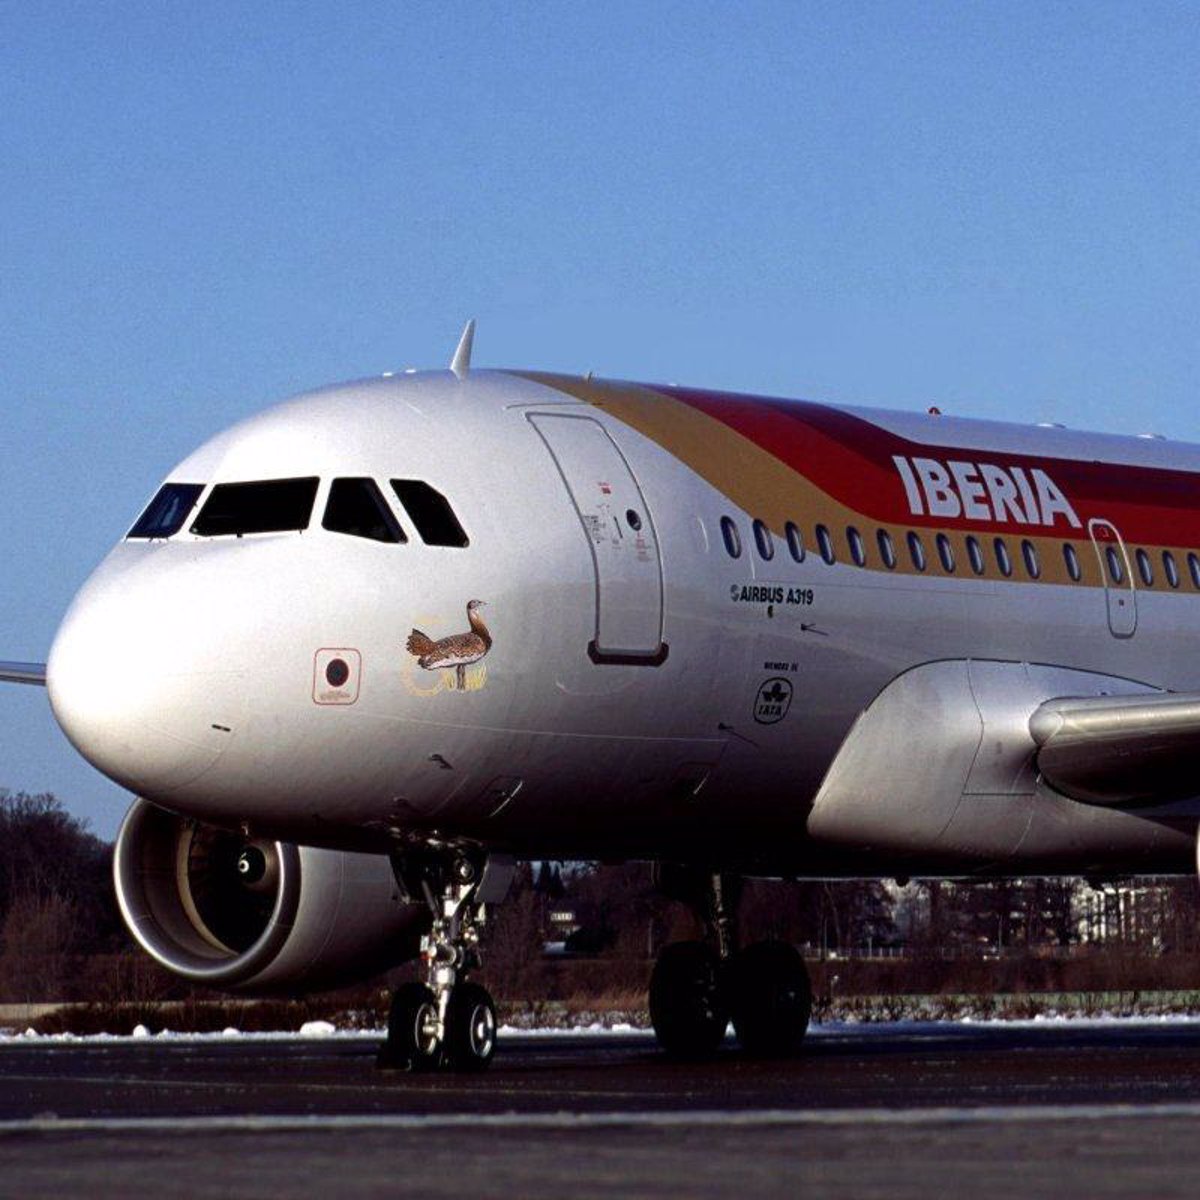 Condenan a Iberia a pagar euros a un viajero al que se le rompió cámara de fotos dentro de la maleta